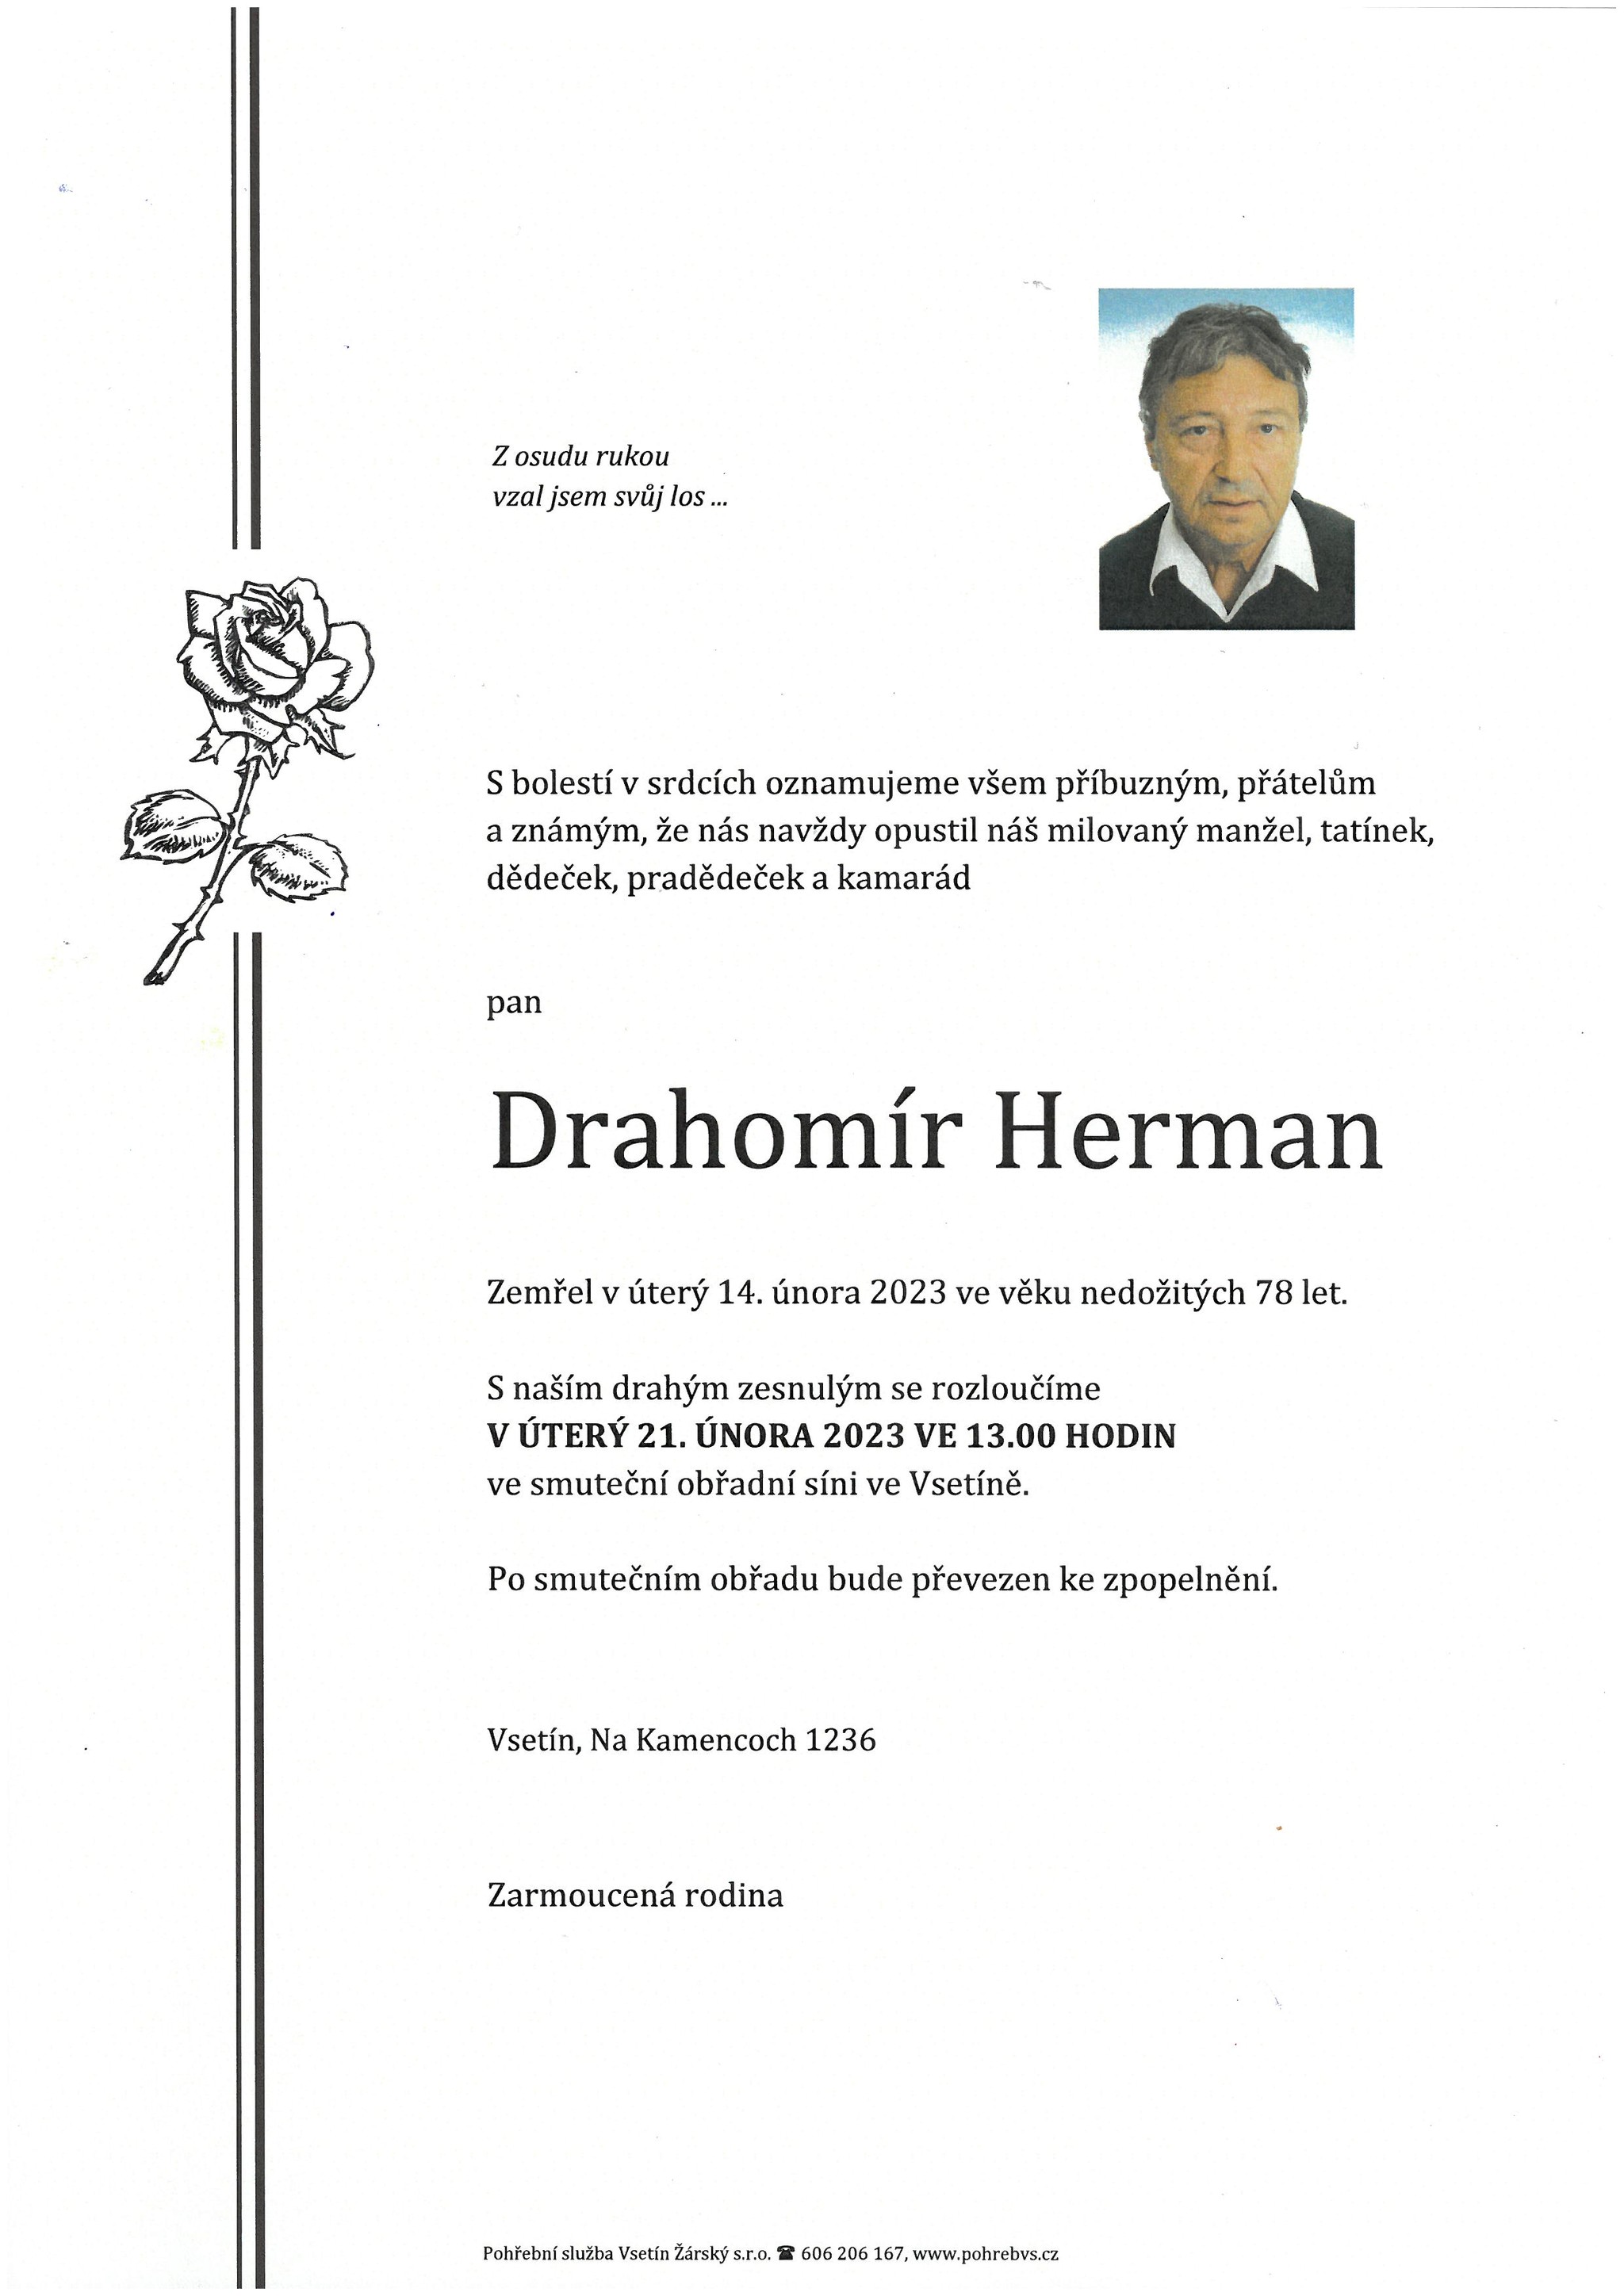 Drahomír Herman